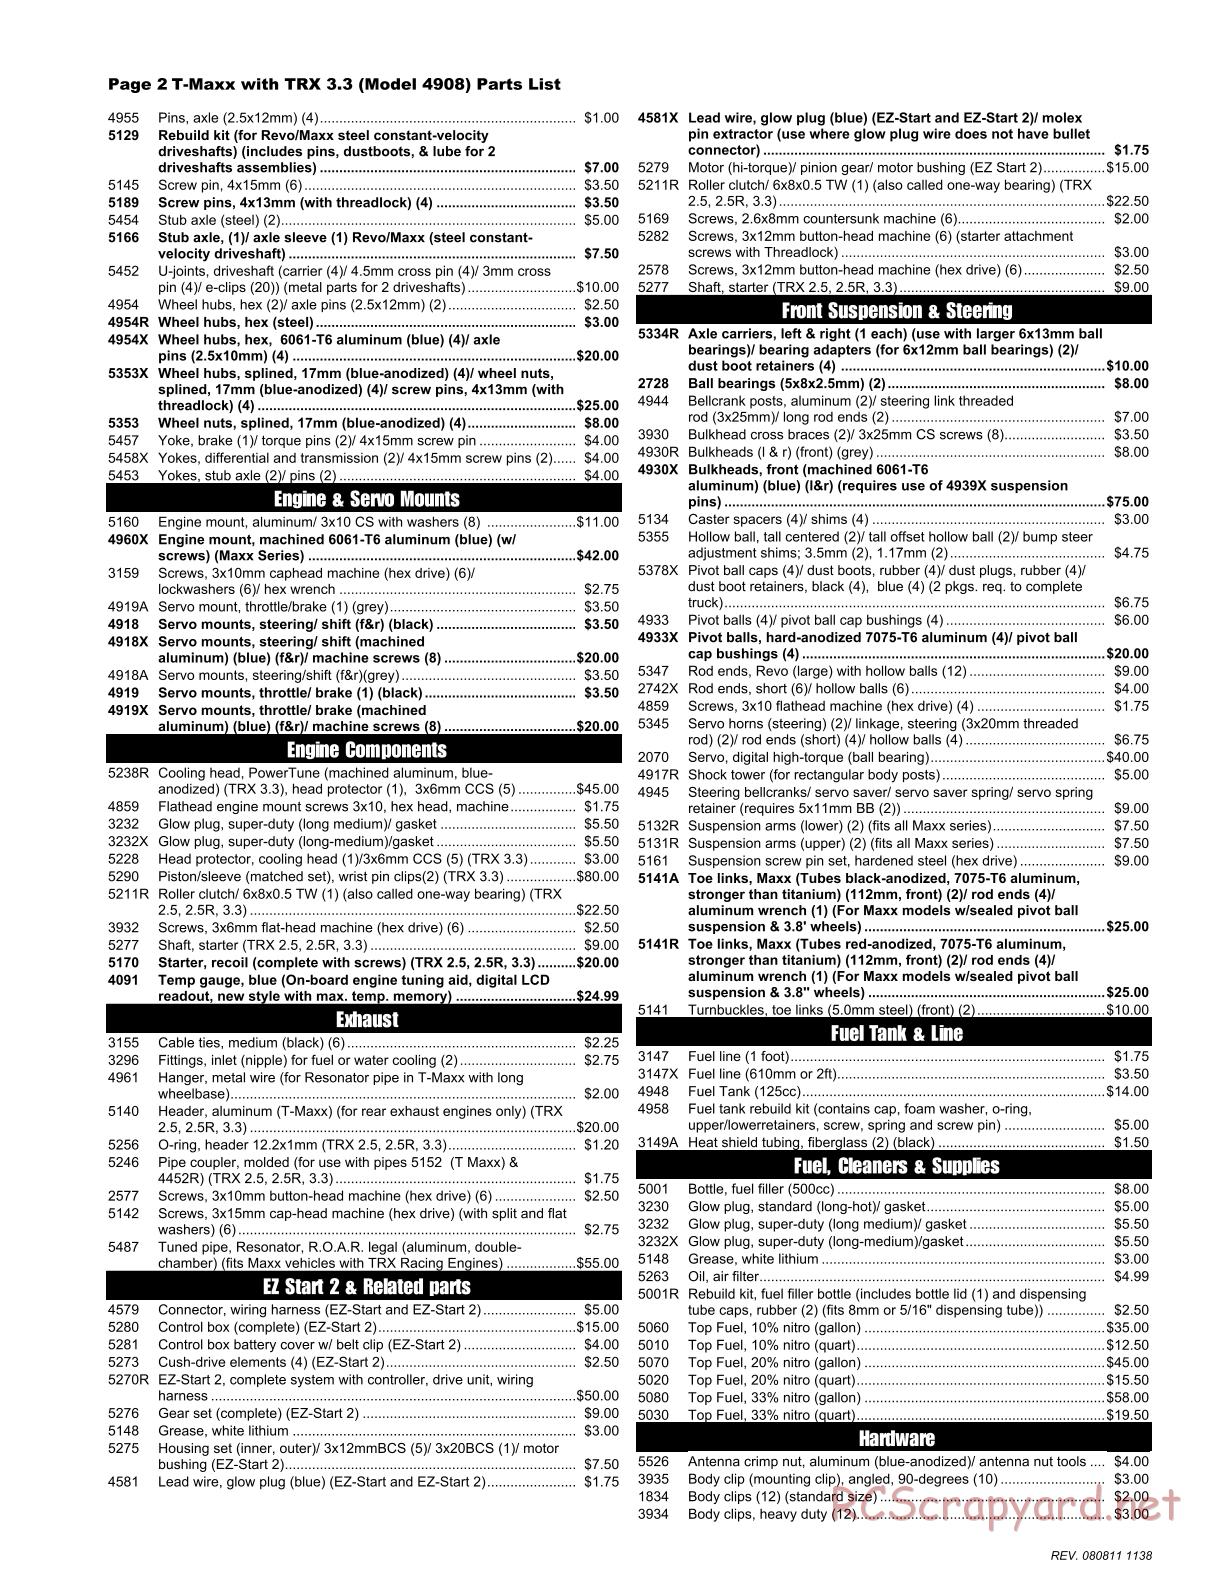 Traxxas - T-Maxx 3.3 (2008) - Parts List - Page 2